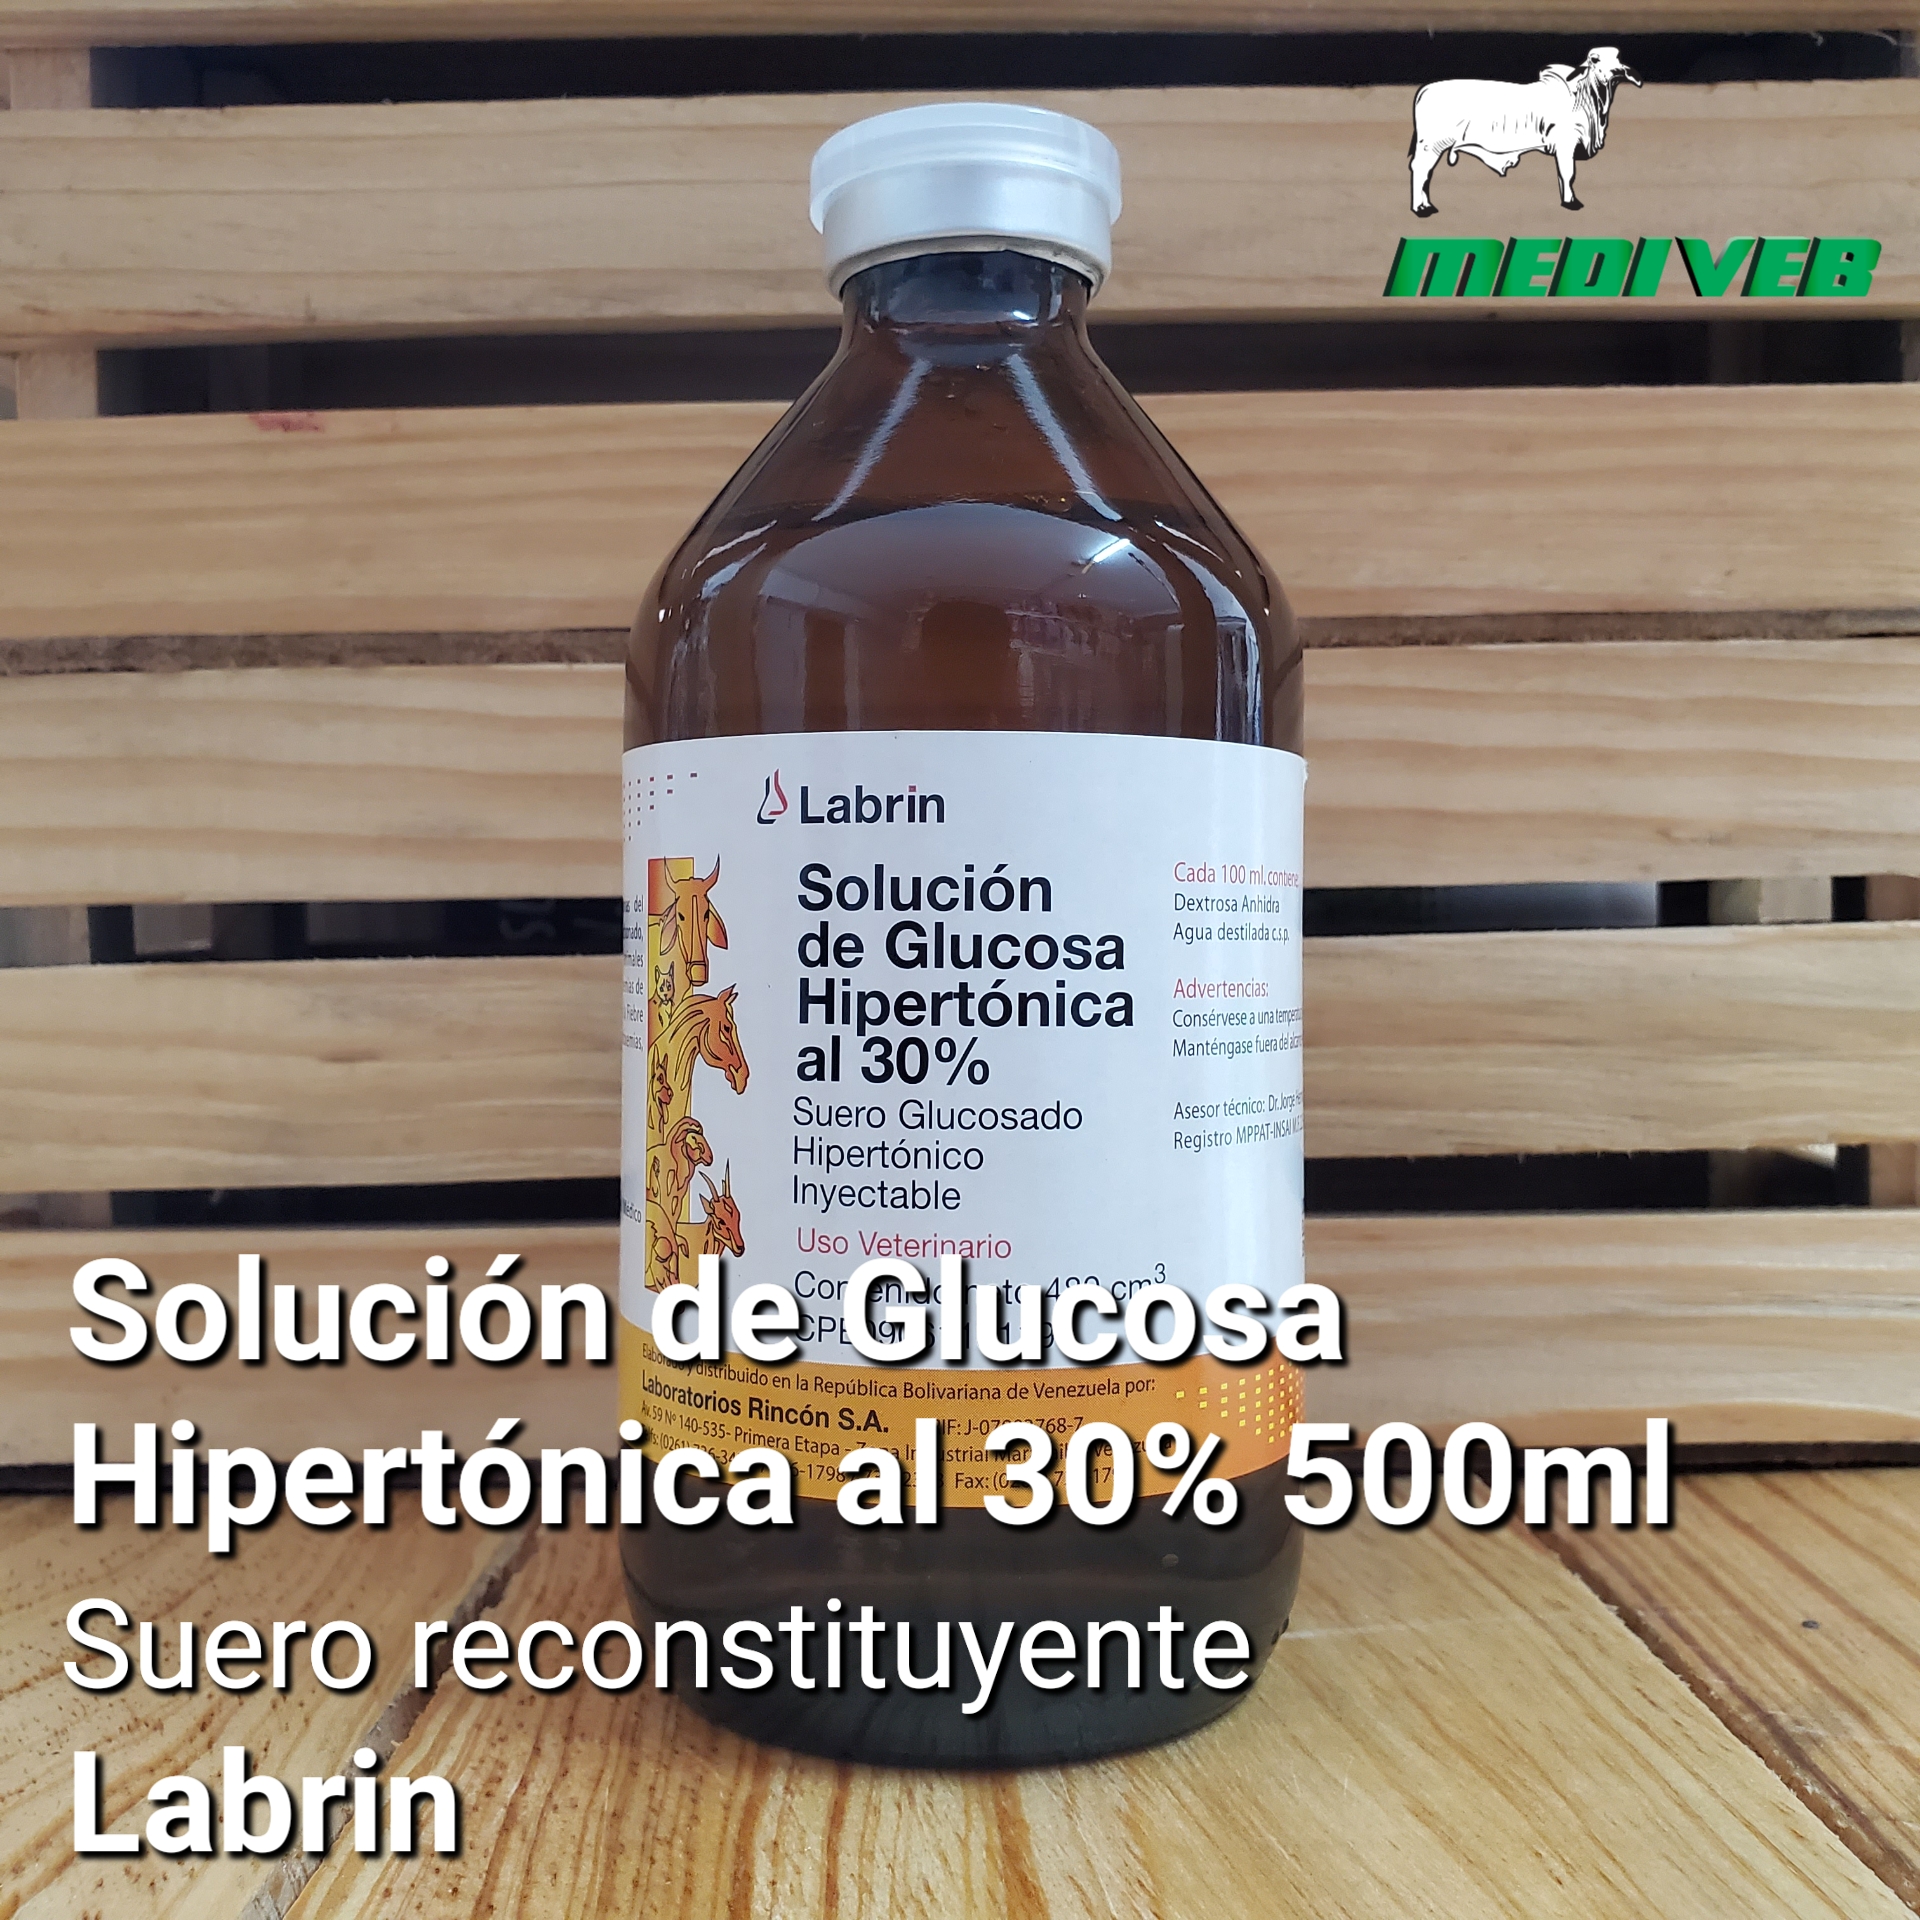 https://mediveb.com/tienda/wp-content/uploads/2020/07/solucion-glucosa-30.jpg